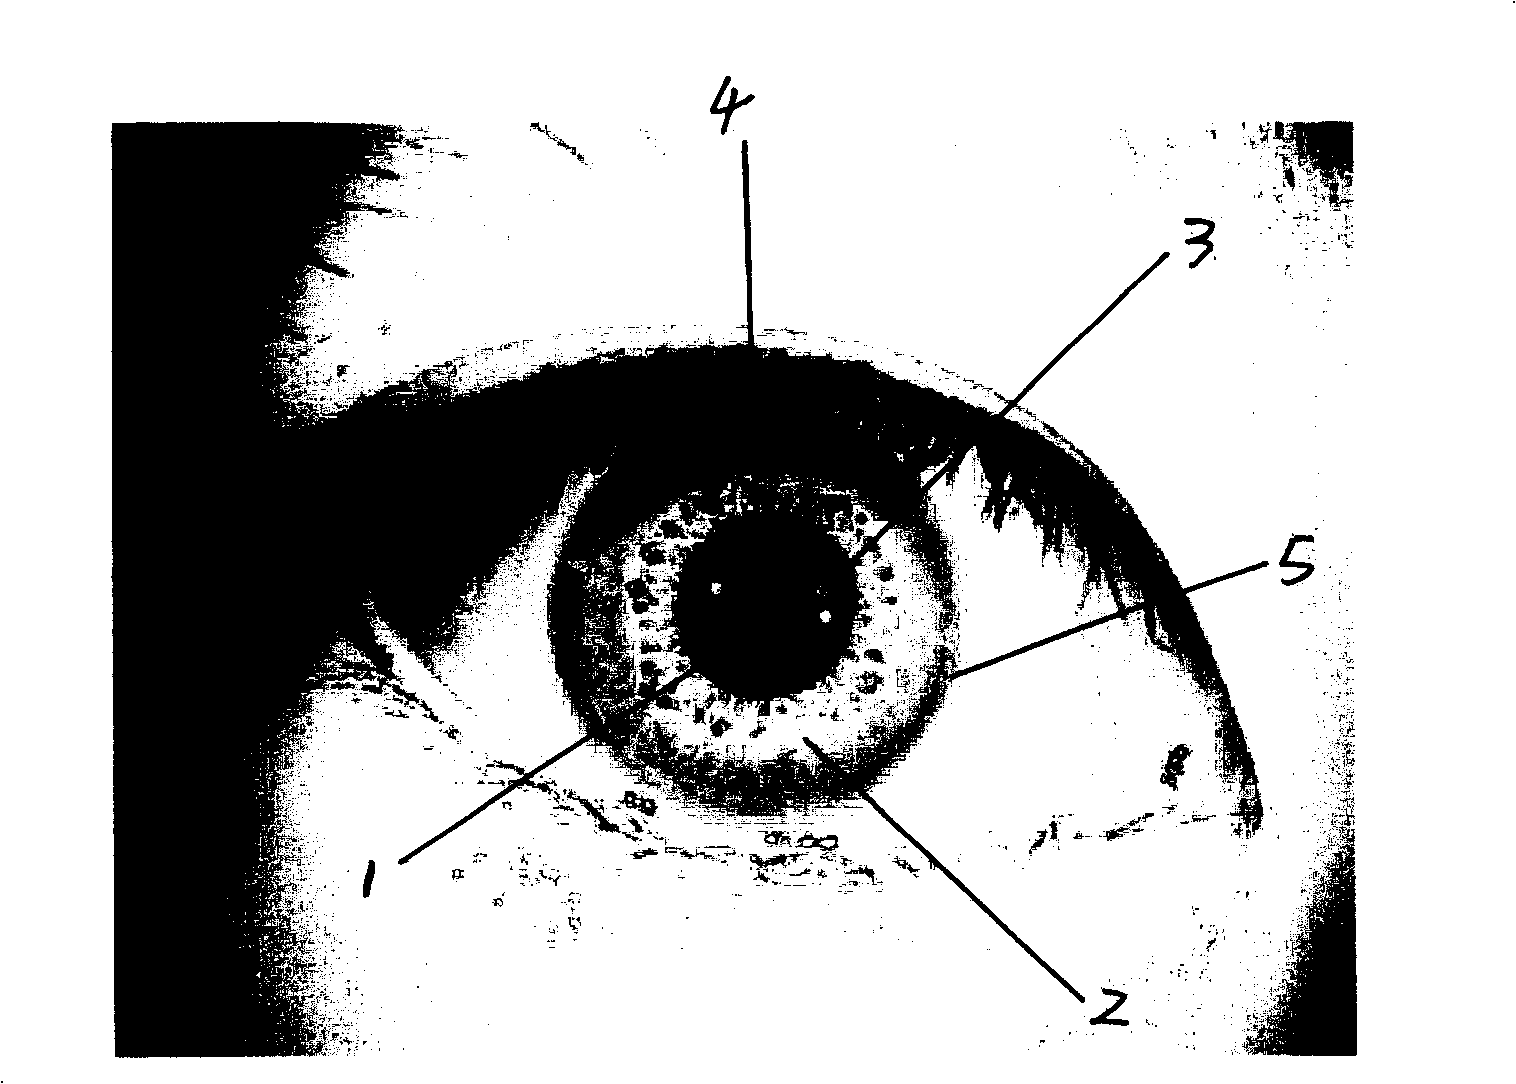 Iris positioning method based on multi-resolutions analysis